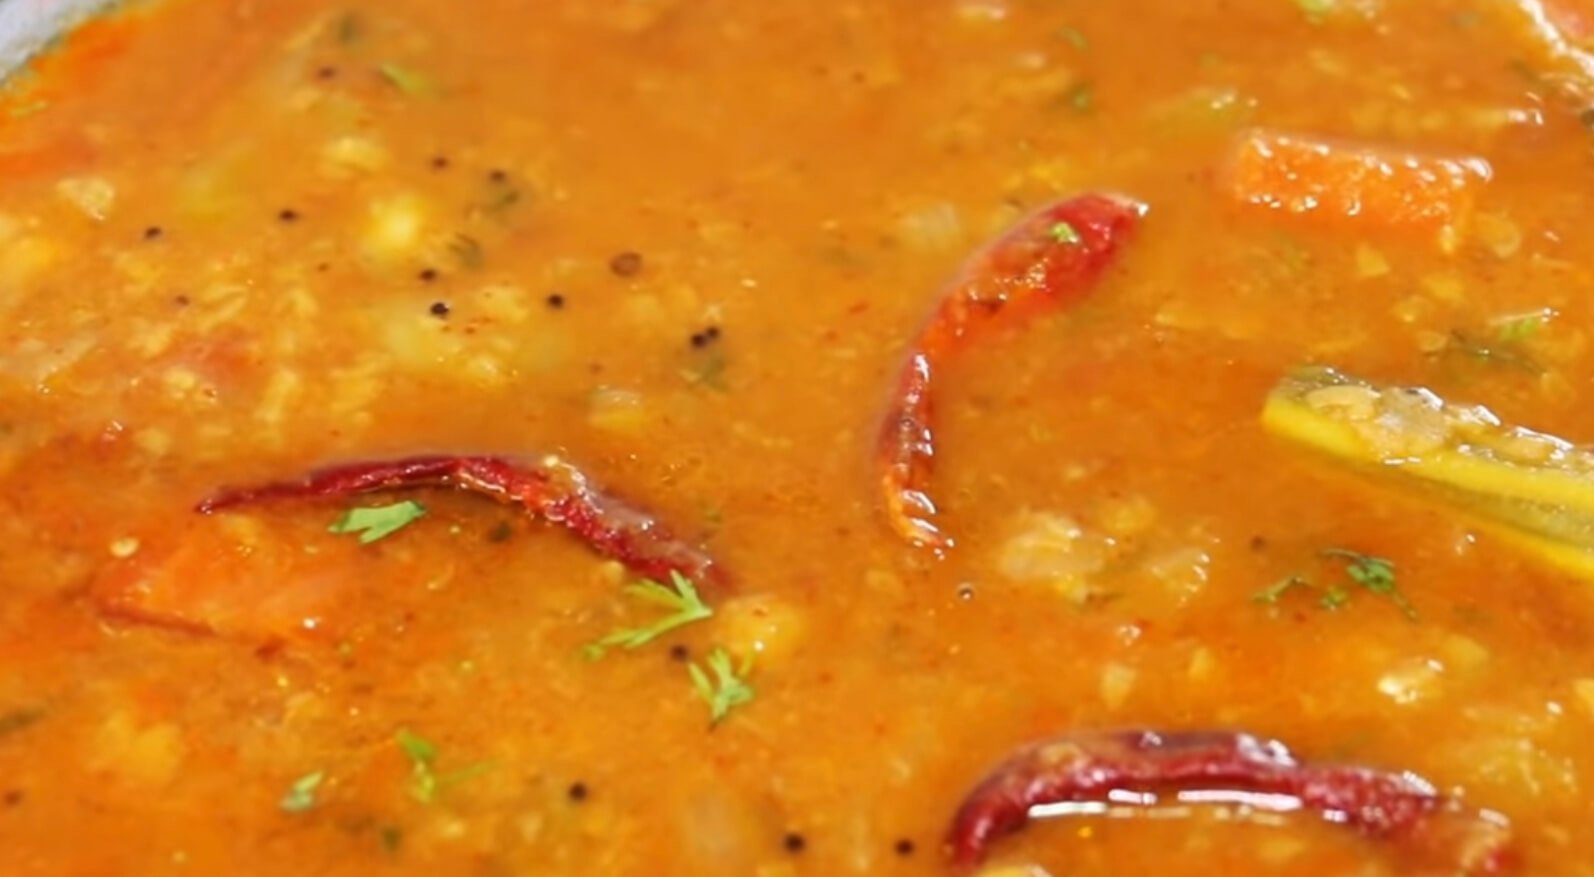 बिना इमली के सांभर कैसे बनेगा | bina imli ke sambar kaise banega | How To Make Sambar Without Tamarind In Hindi |